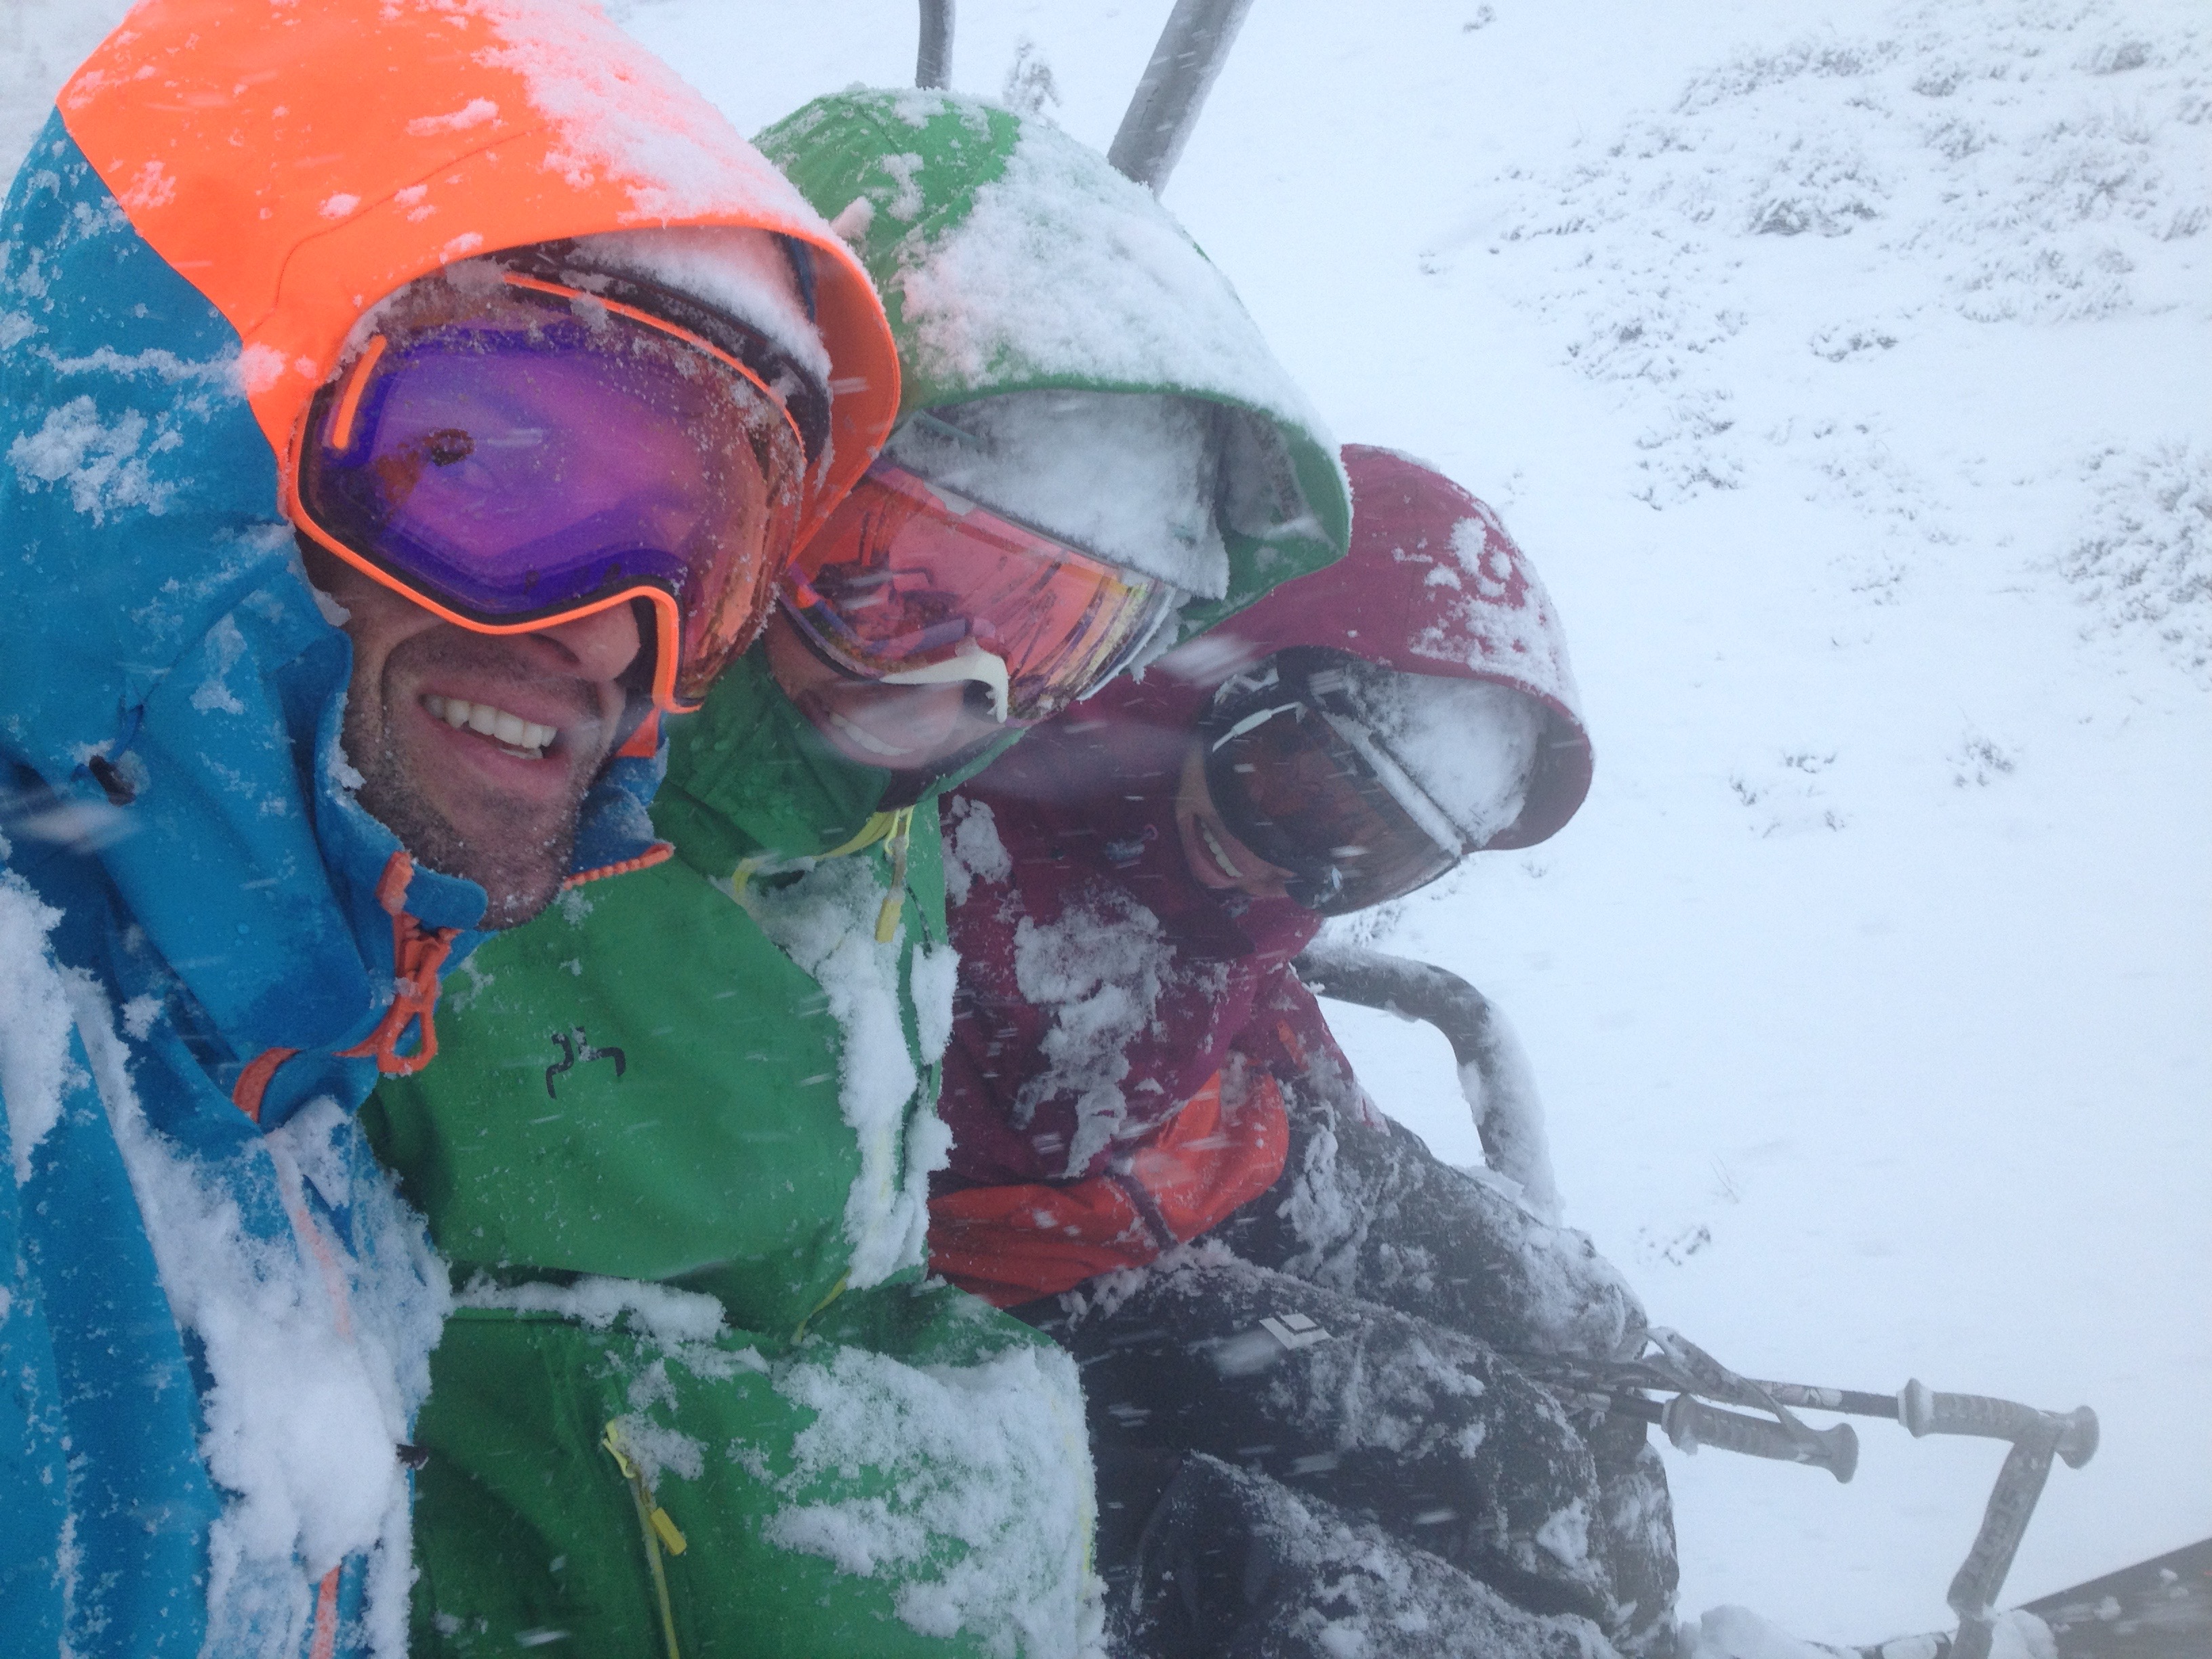 The crew. photo: snowbrains